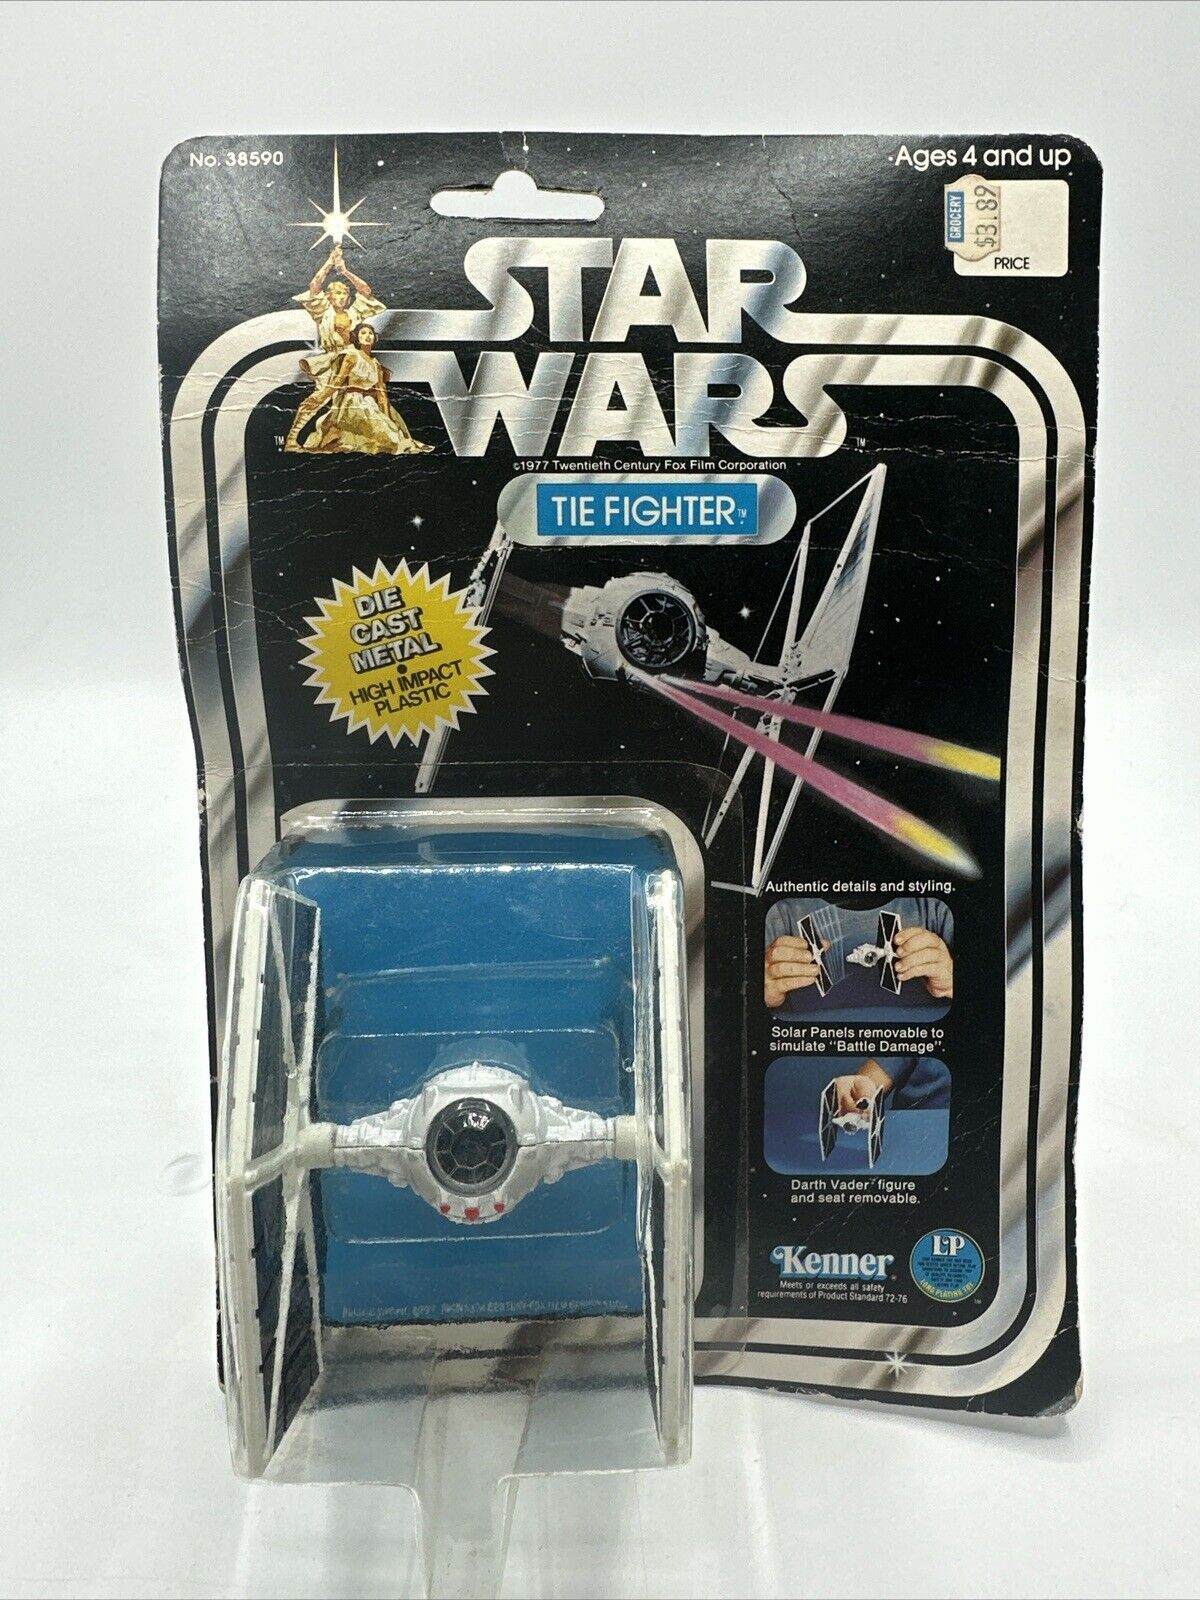 1978 Kenner Star Wars Die Cast Metal Tie Fighter On Card 12 Back Vintage